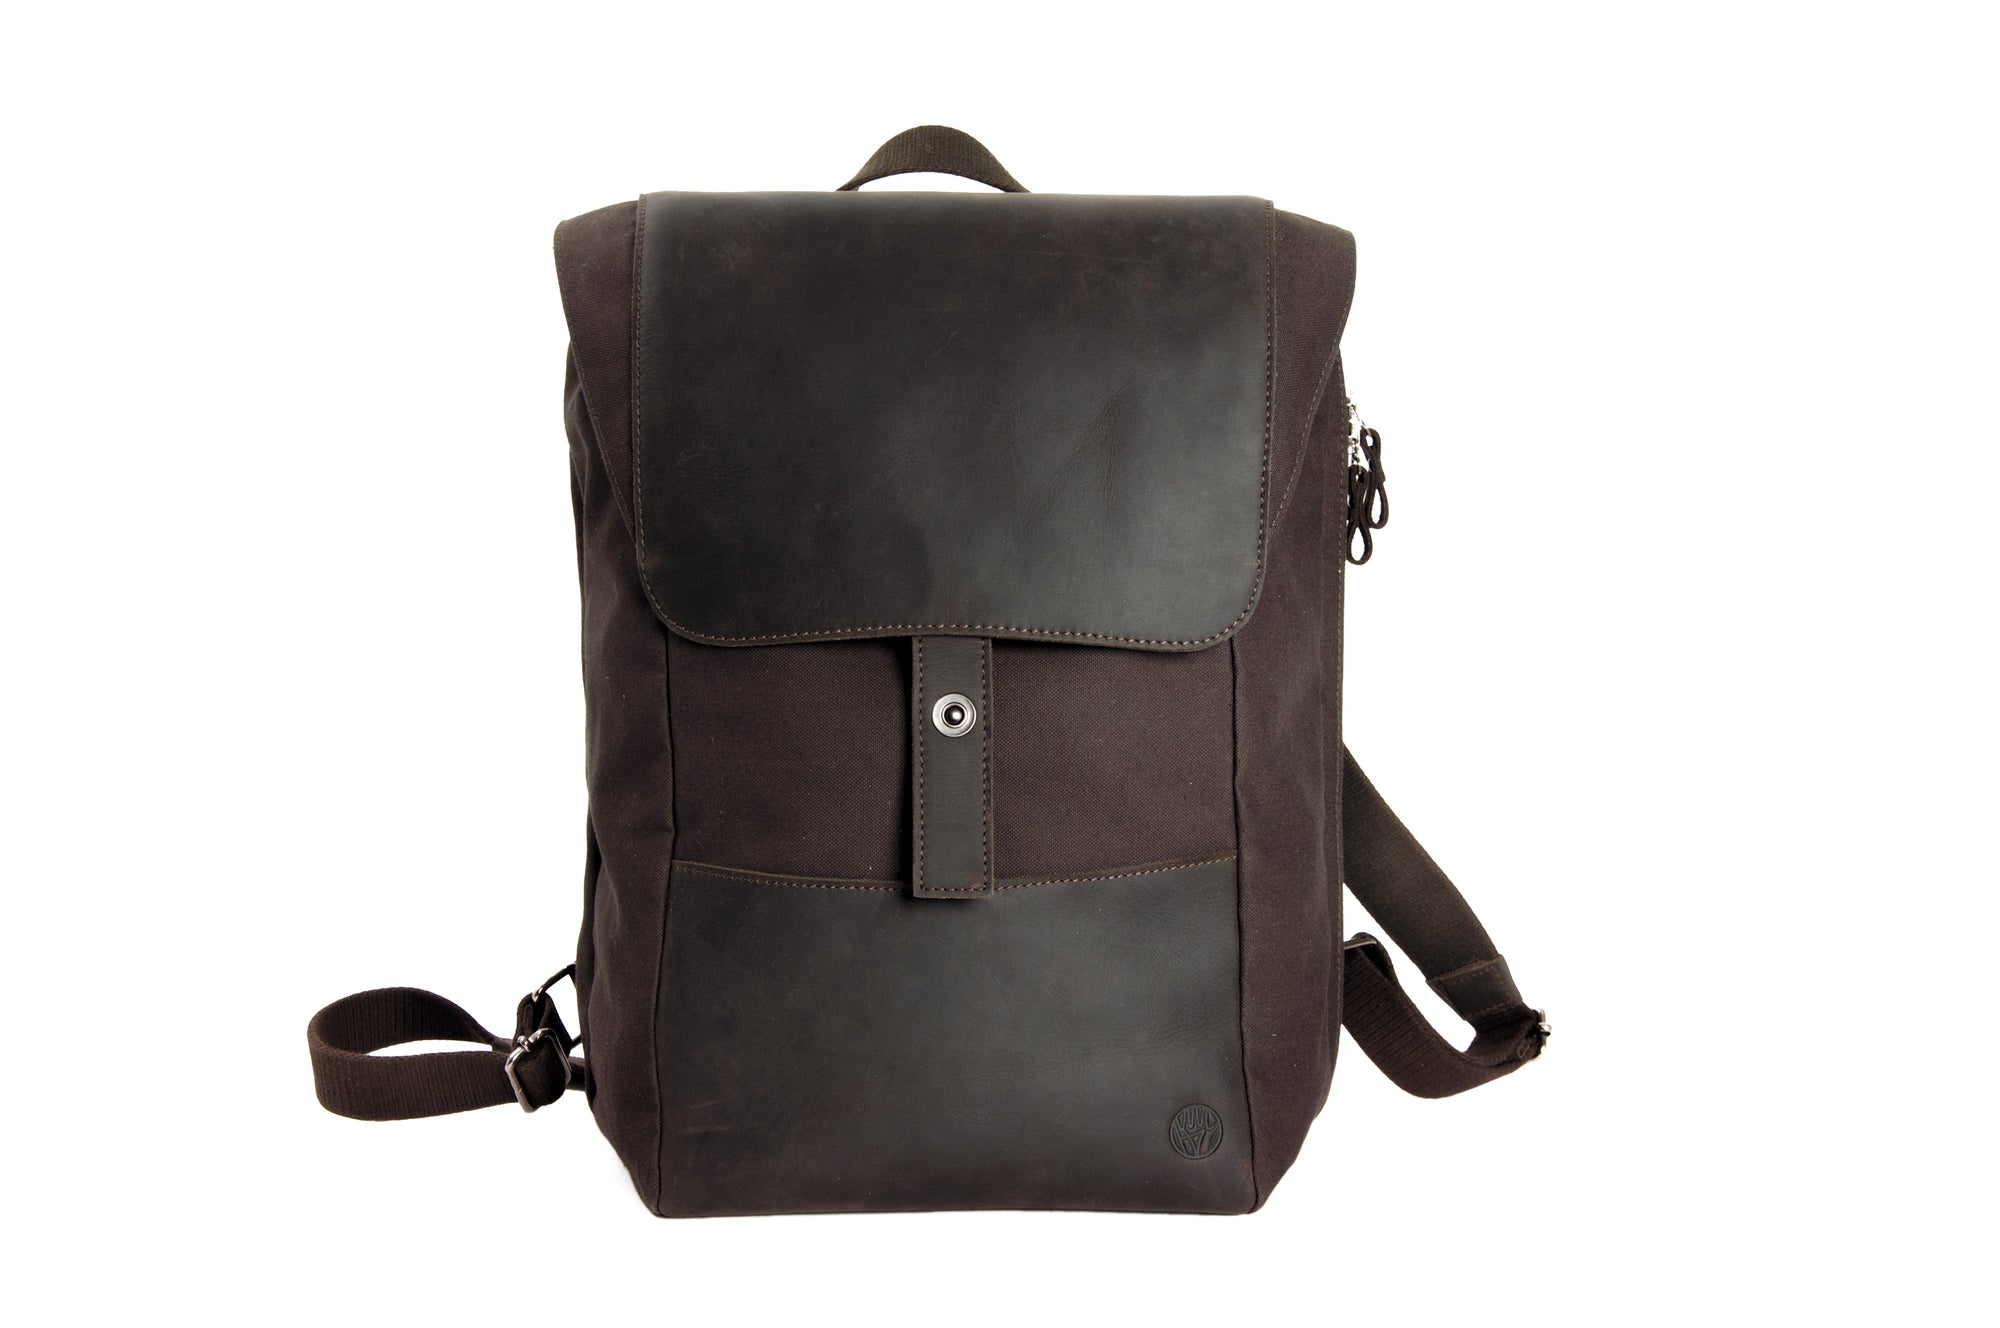 Waxcan messenger bag/backpack